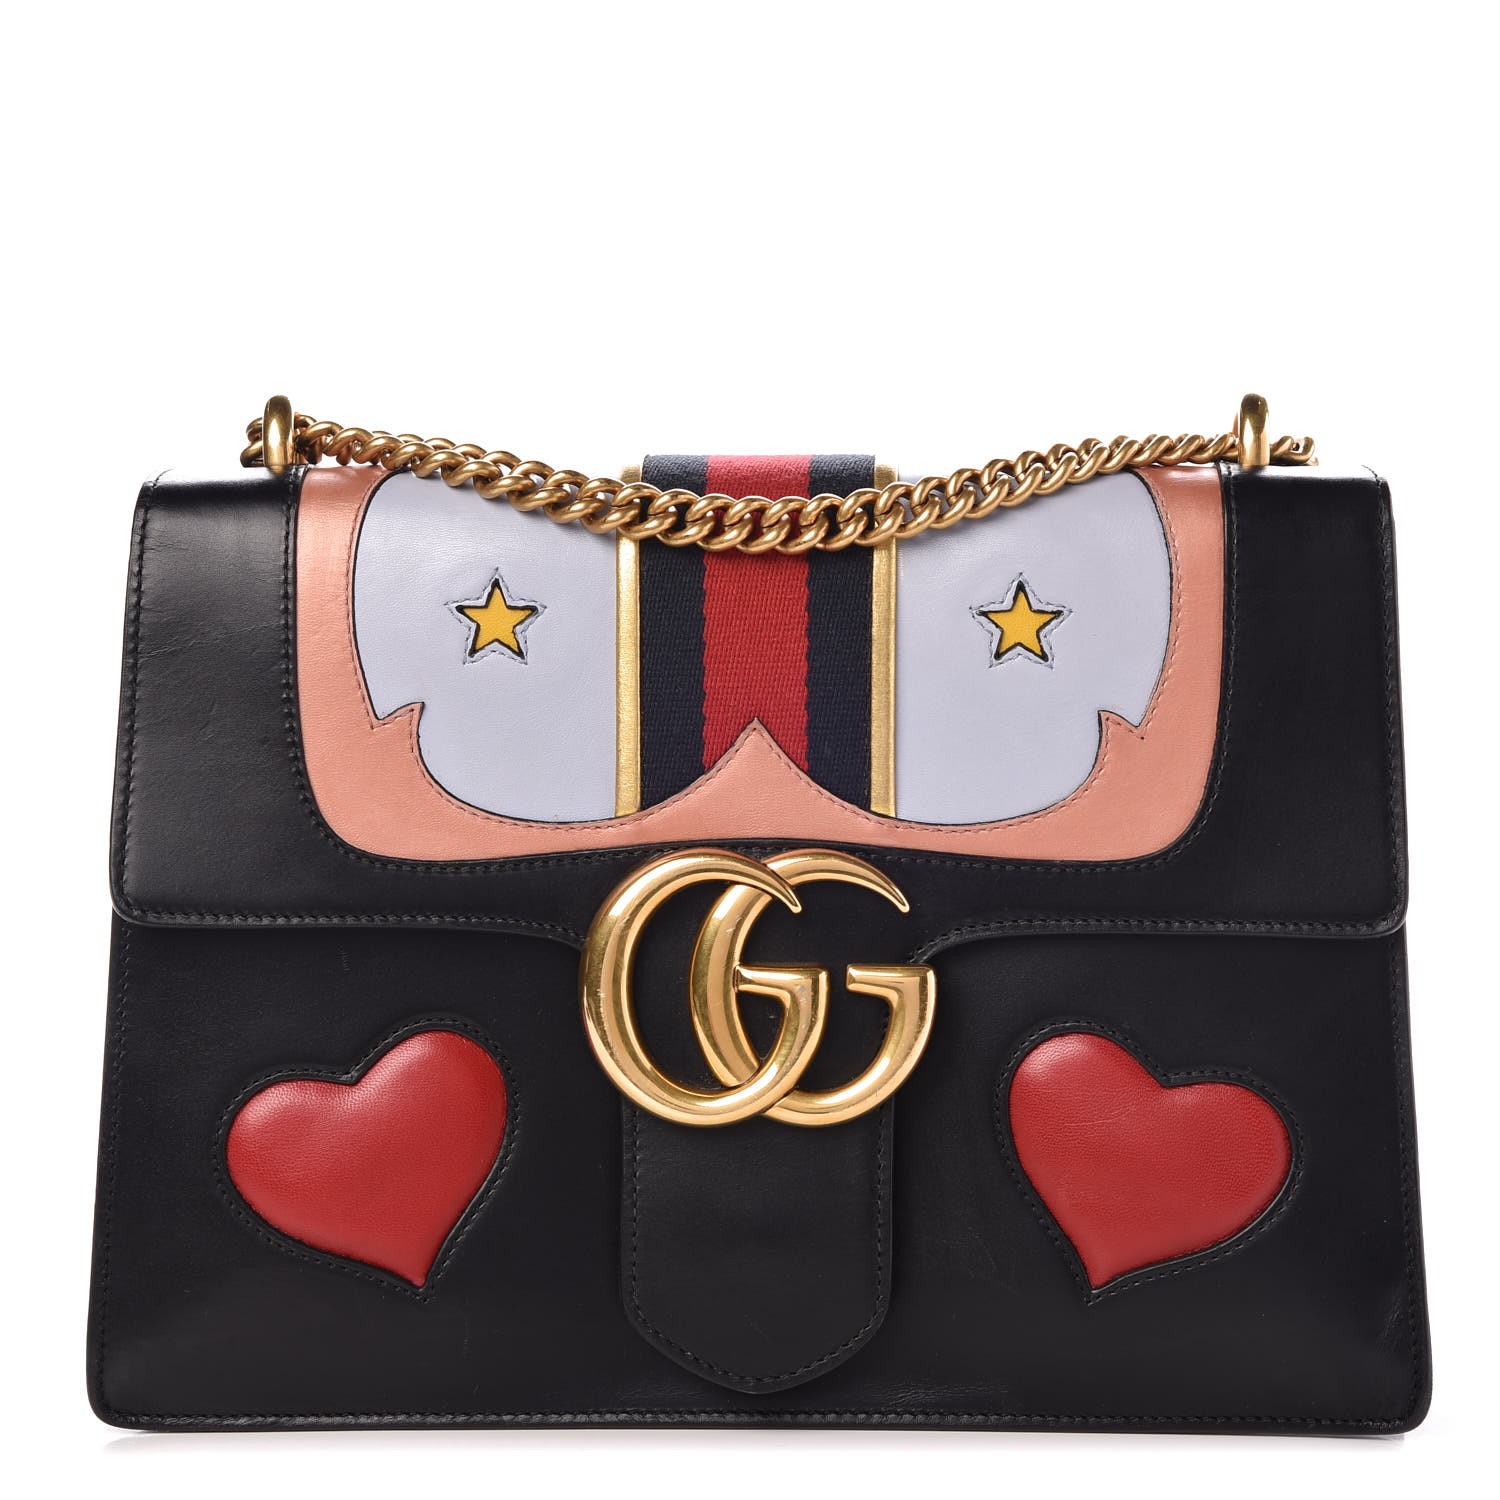 black gucci purse with heart